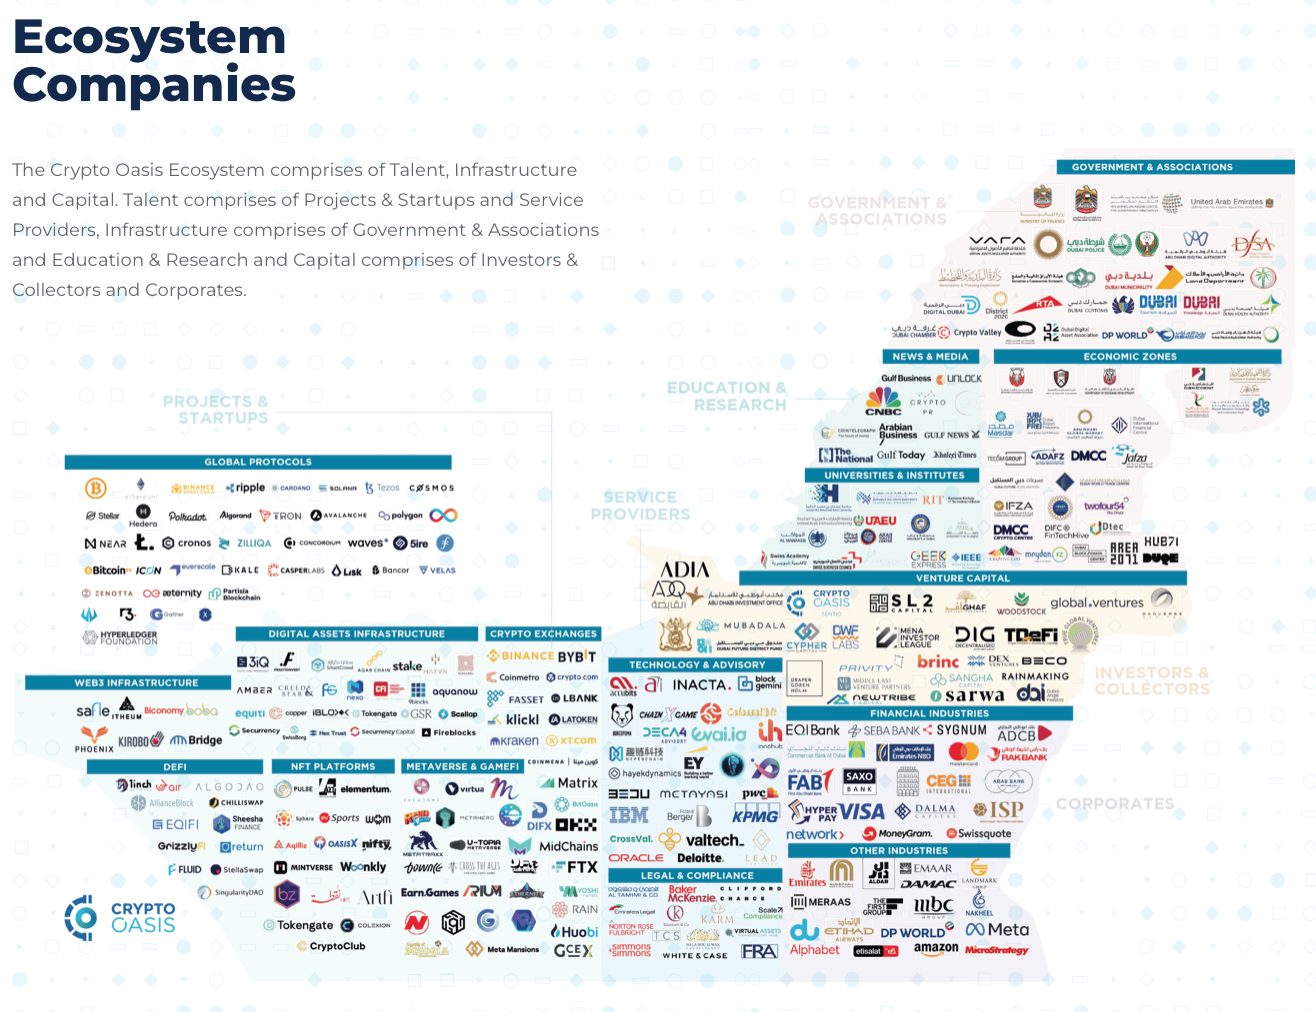 Ecosystem companies. Source: Crypto Oasis Ecosystem Report